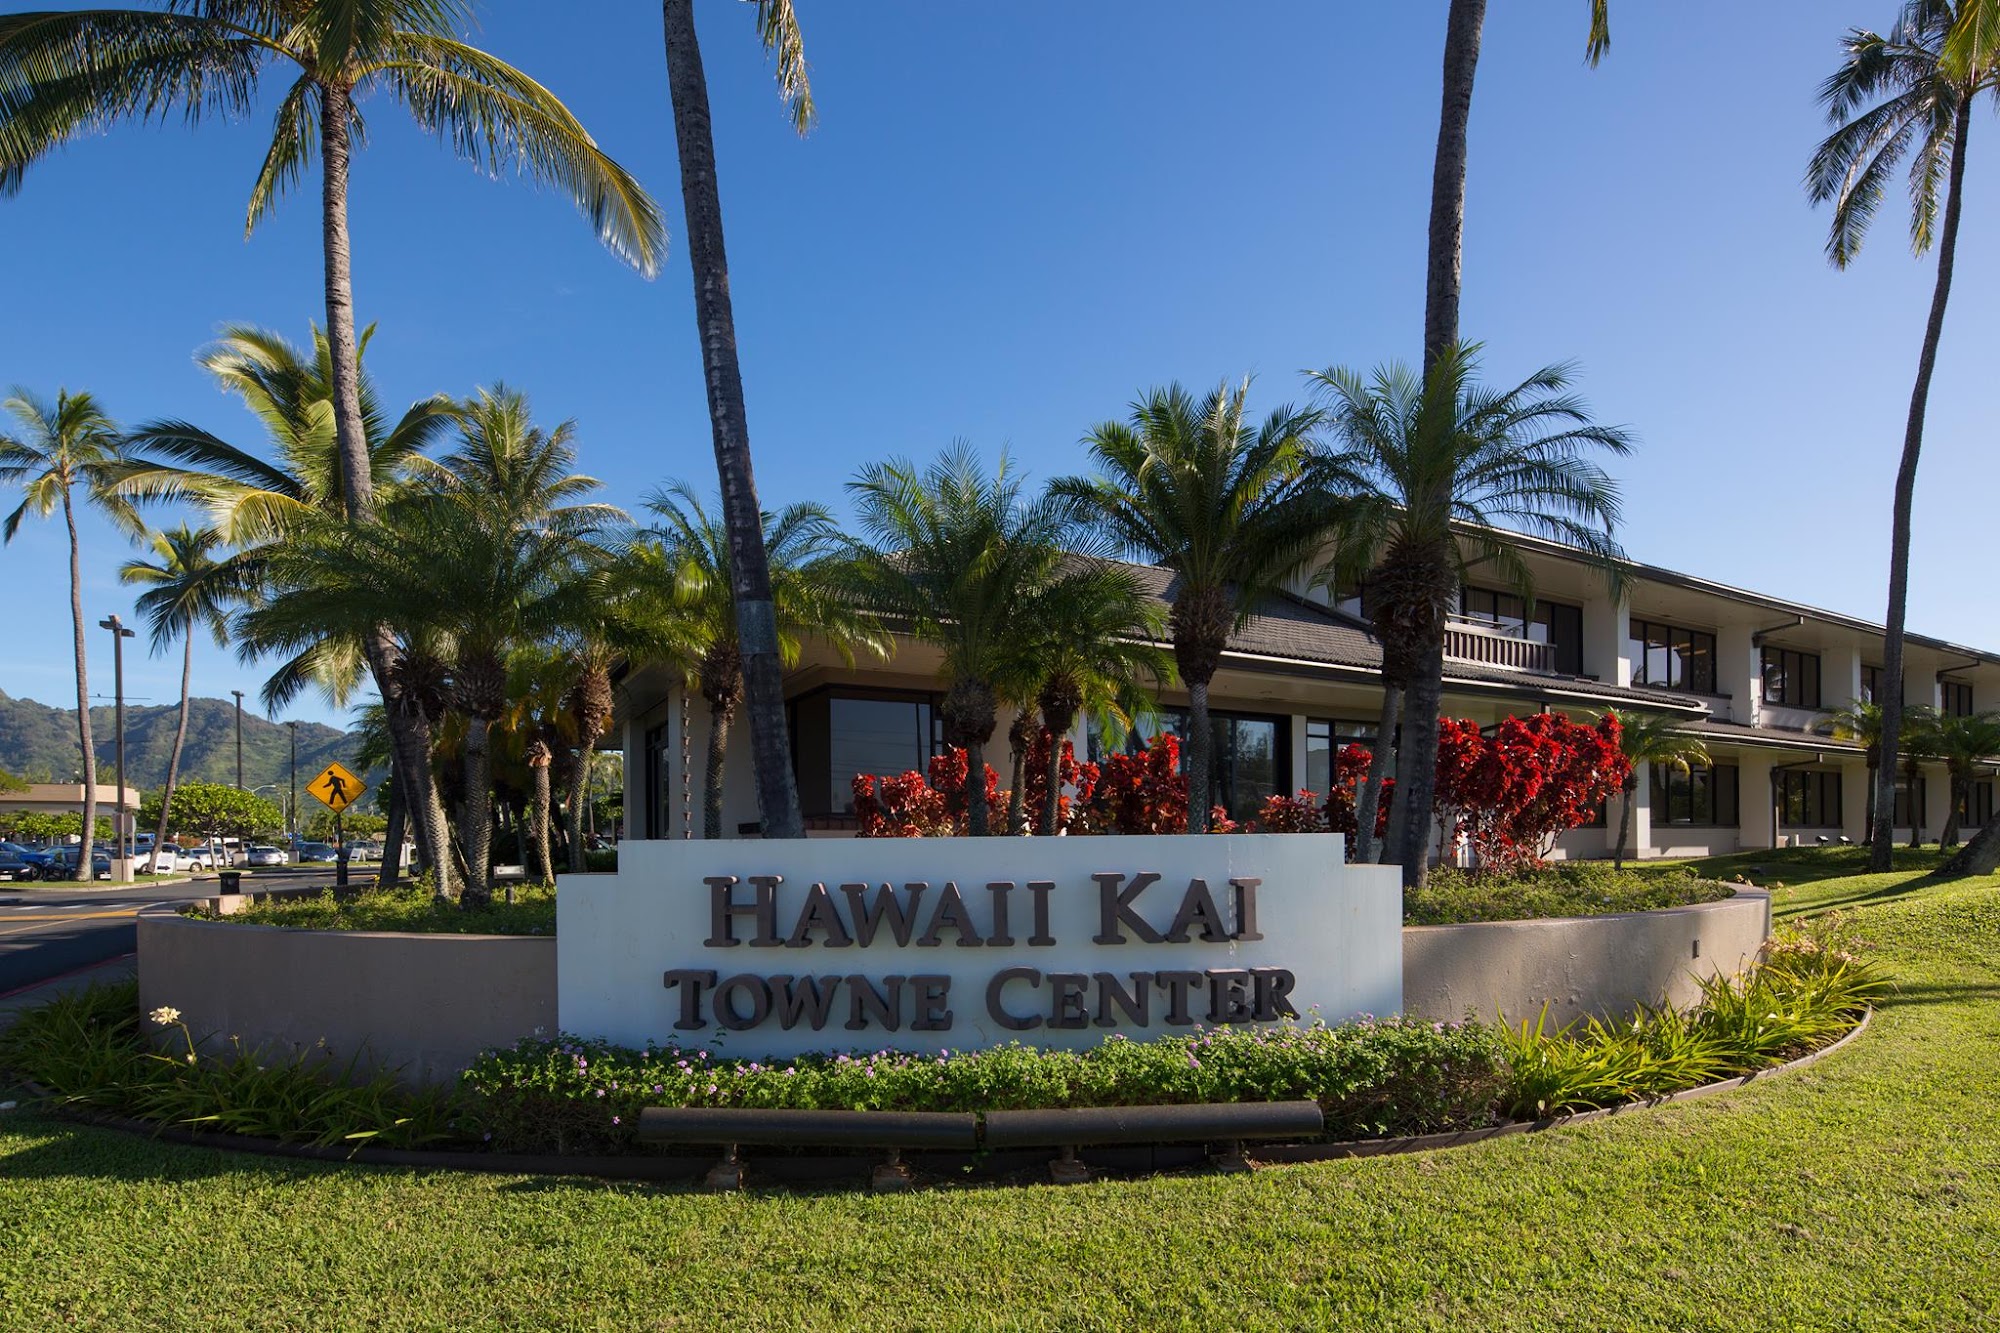 Hawaiʻi Kai Towne Center